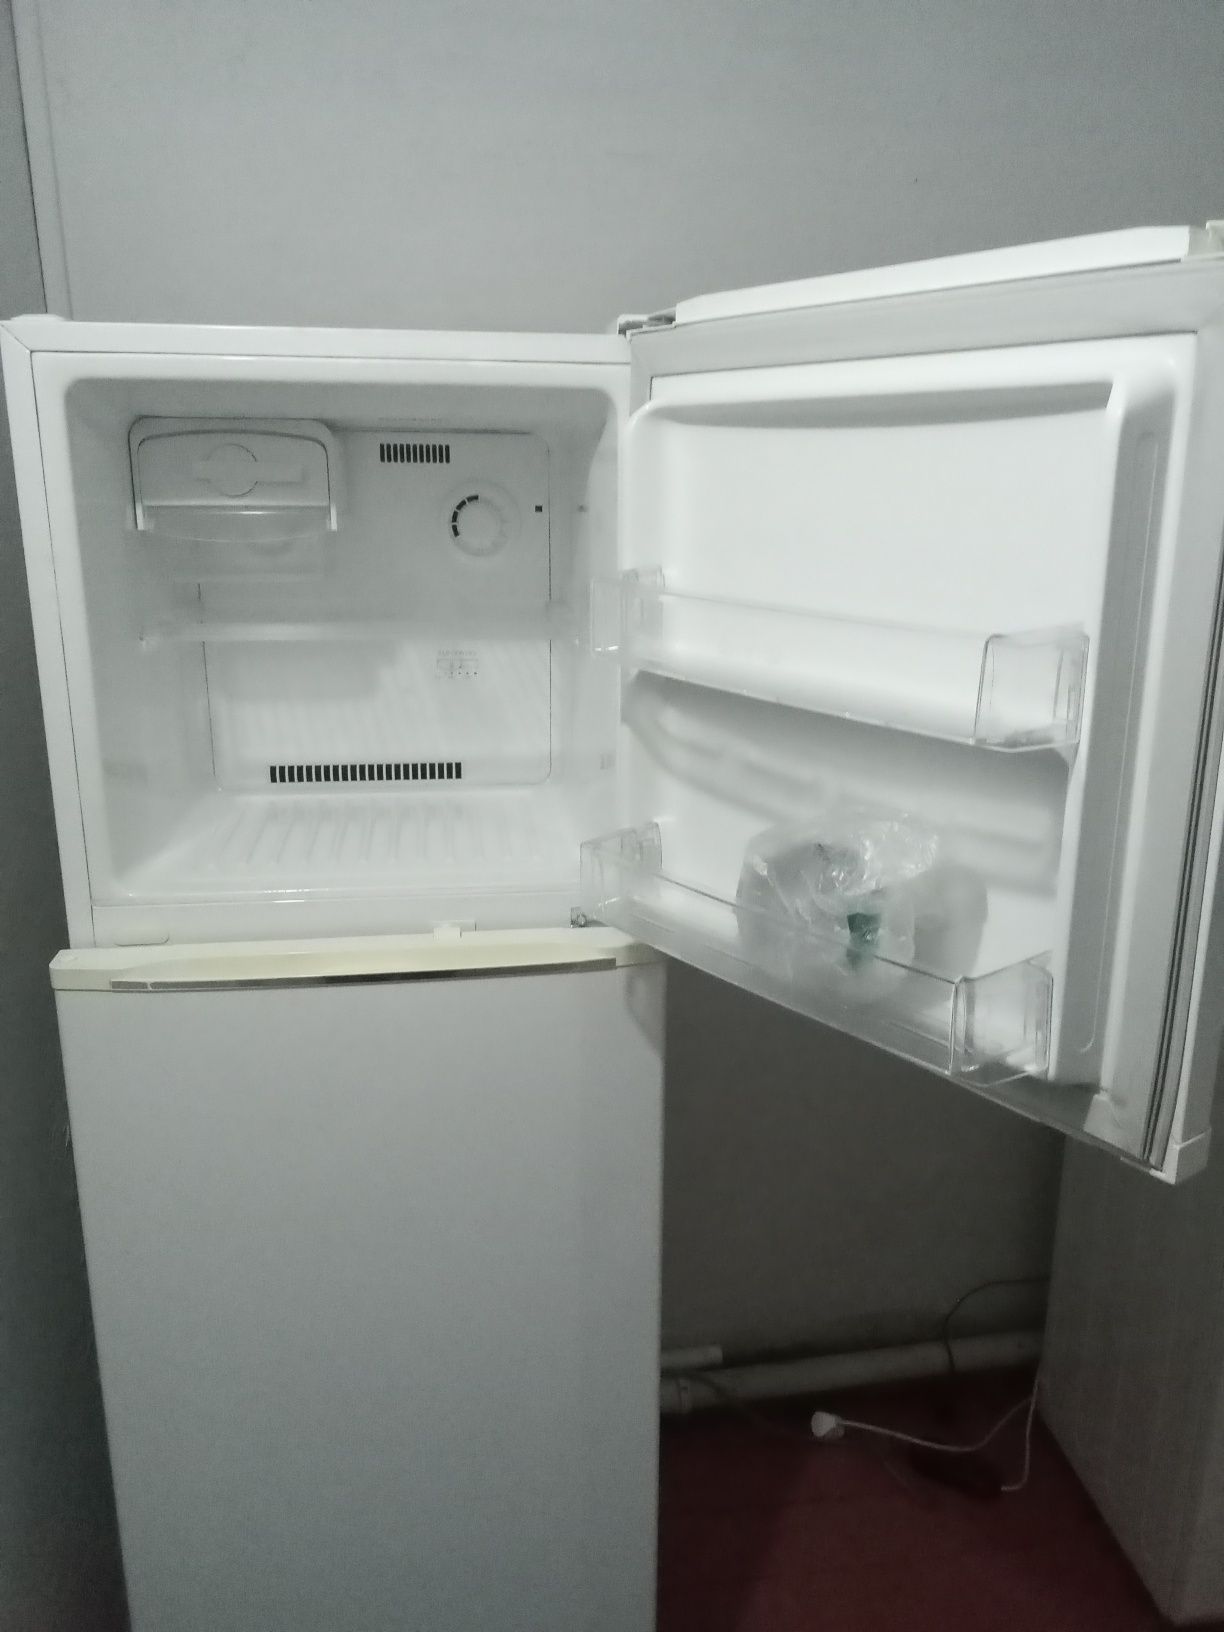 Холодильник LG сотилади